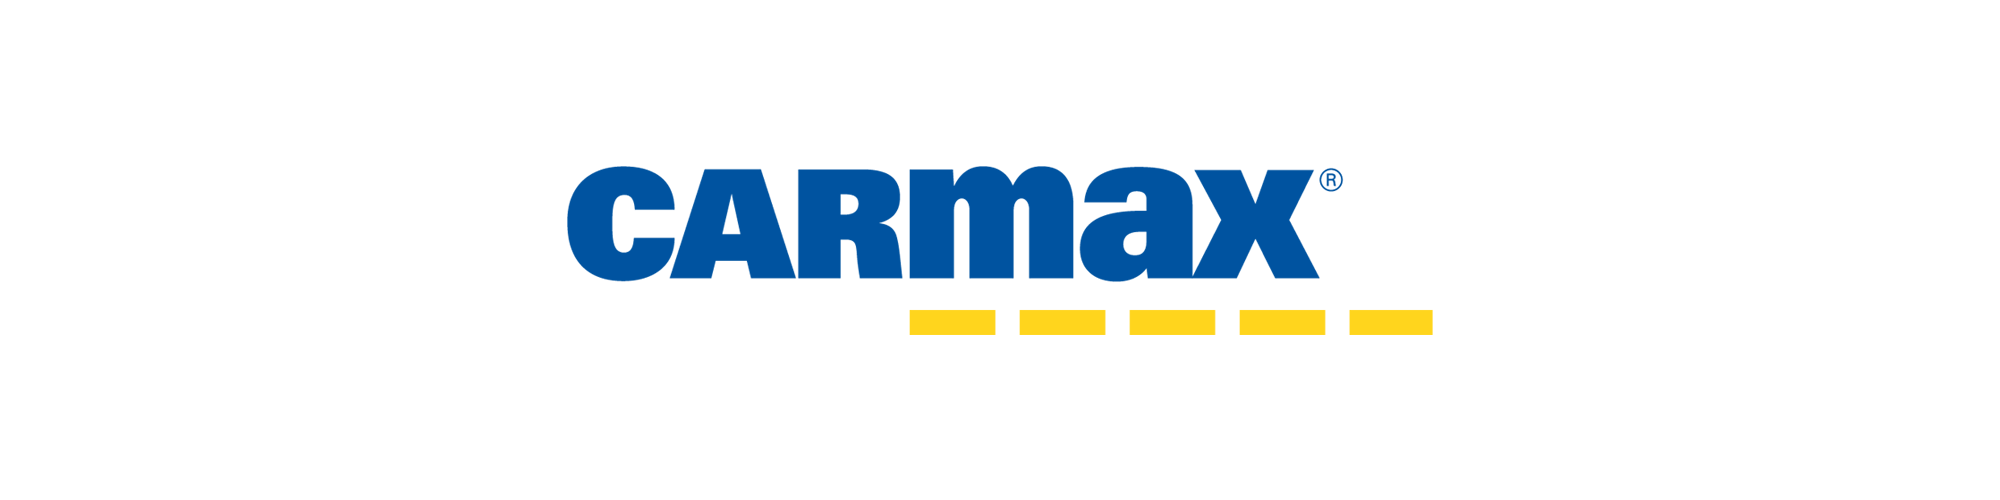 Logo Carmax Png - Apply For The Carmax Non Profit Scholarship Program, Transparent background PNG HD thumbnail